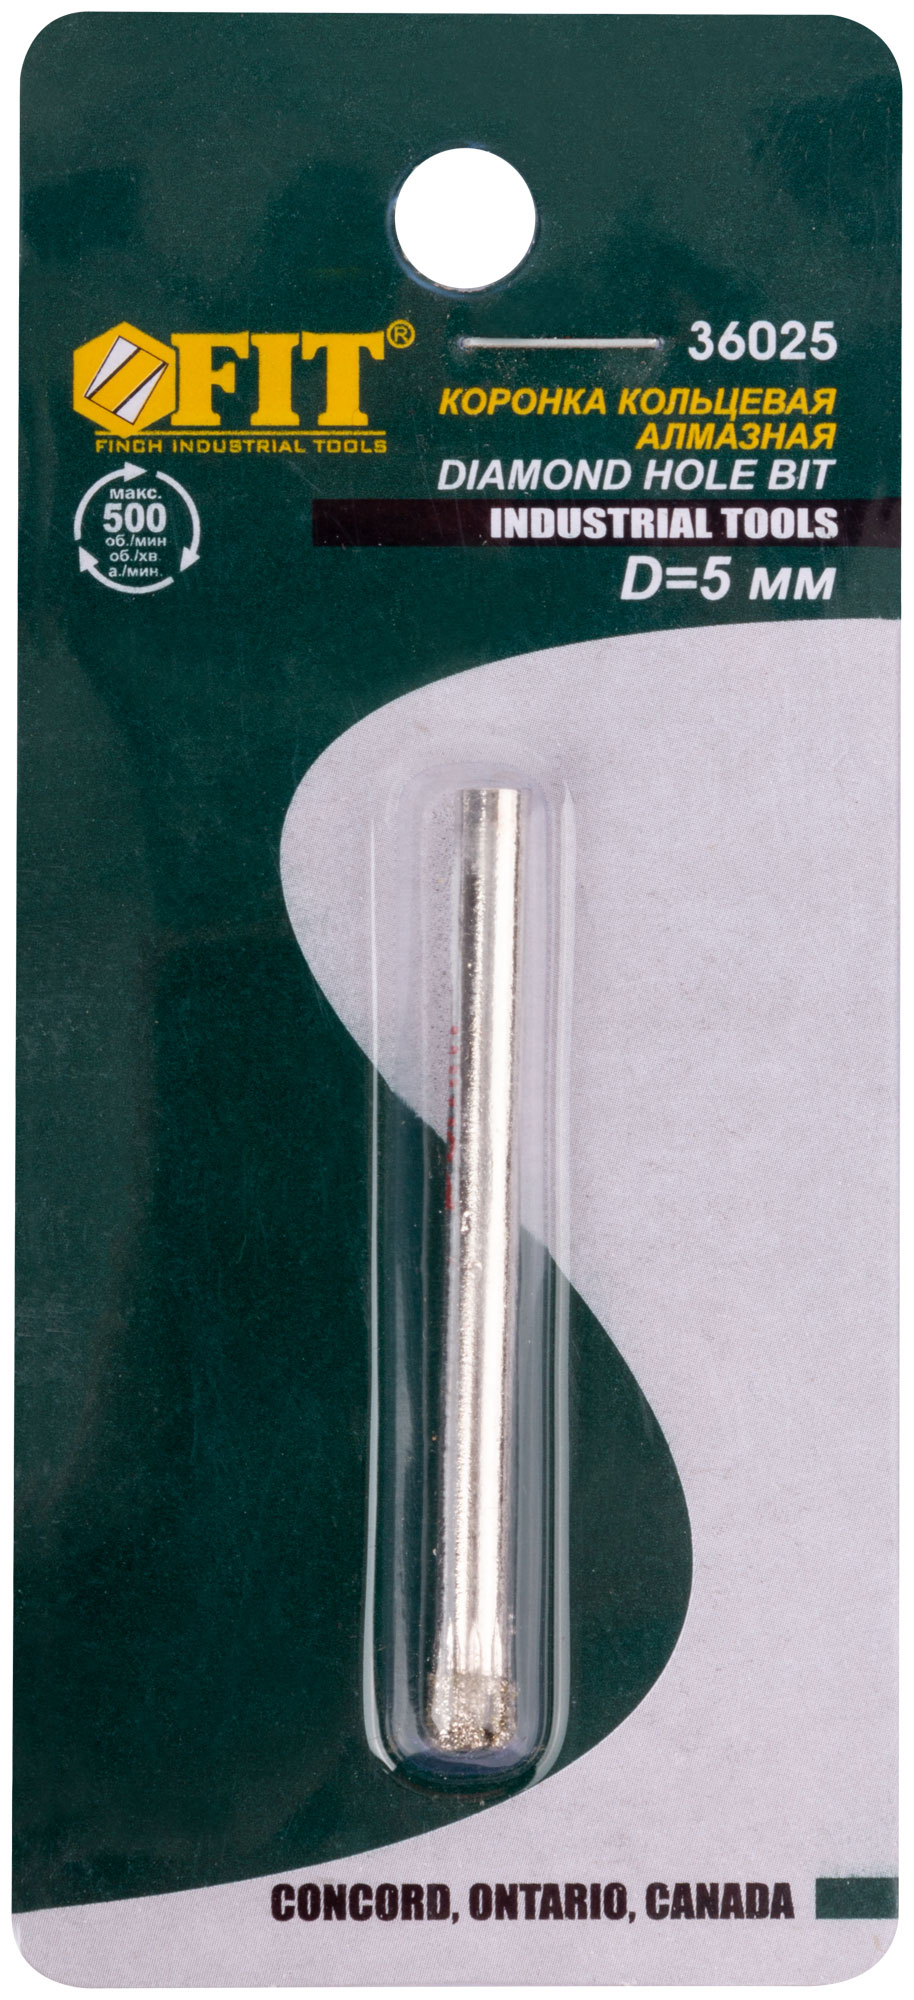 Коронка алмазная кольцевая для стекла / кафеля  5 мм